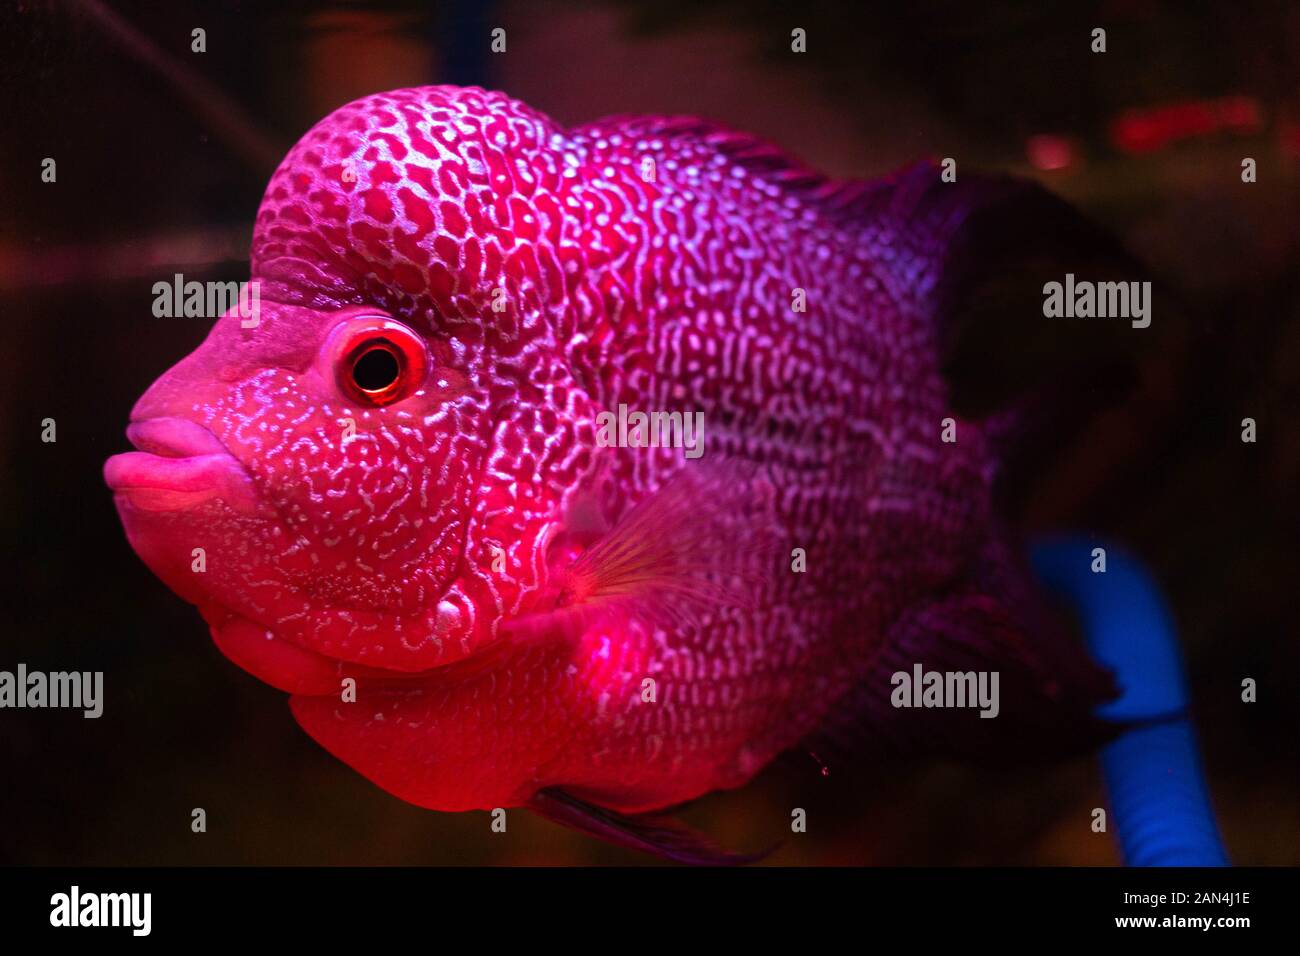 Picture of Flowerhorn Fish (Flowerhorn cichlid) Stock Photo